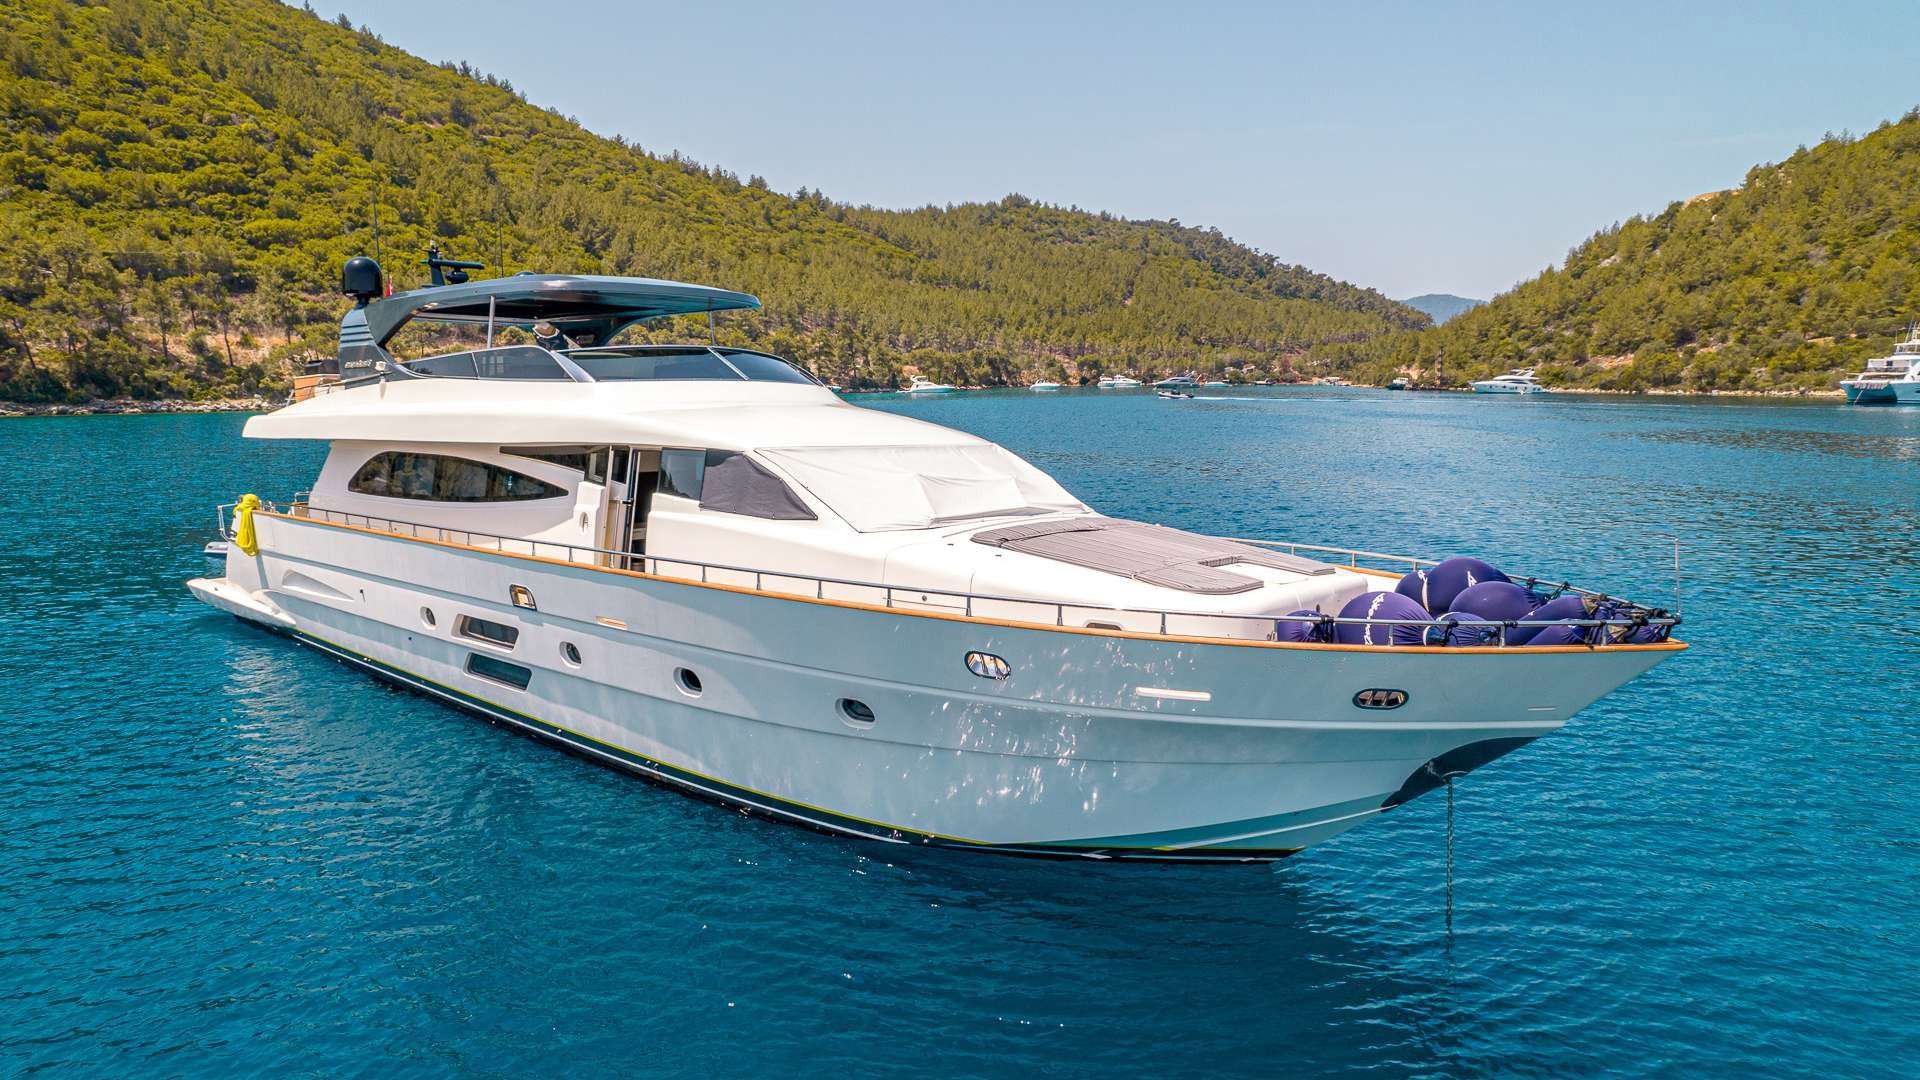 LIBERATA - Motor Boat Charter Turkey & Boat hire in Greece & Turkey 1